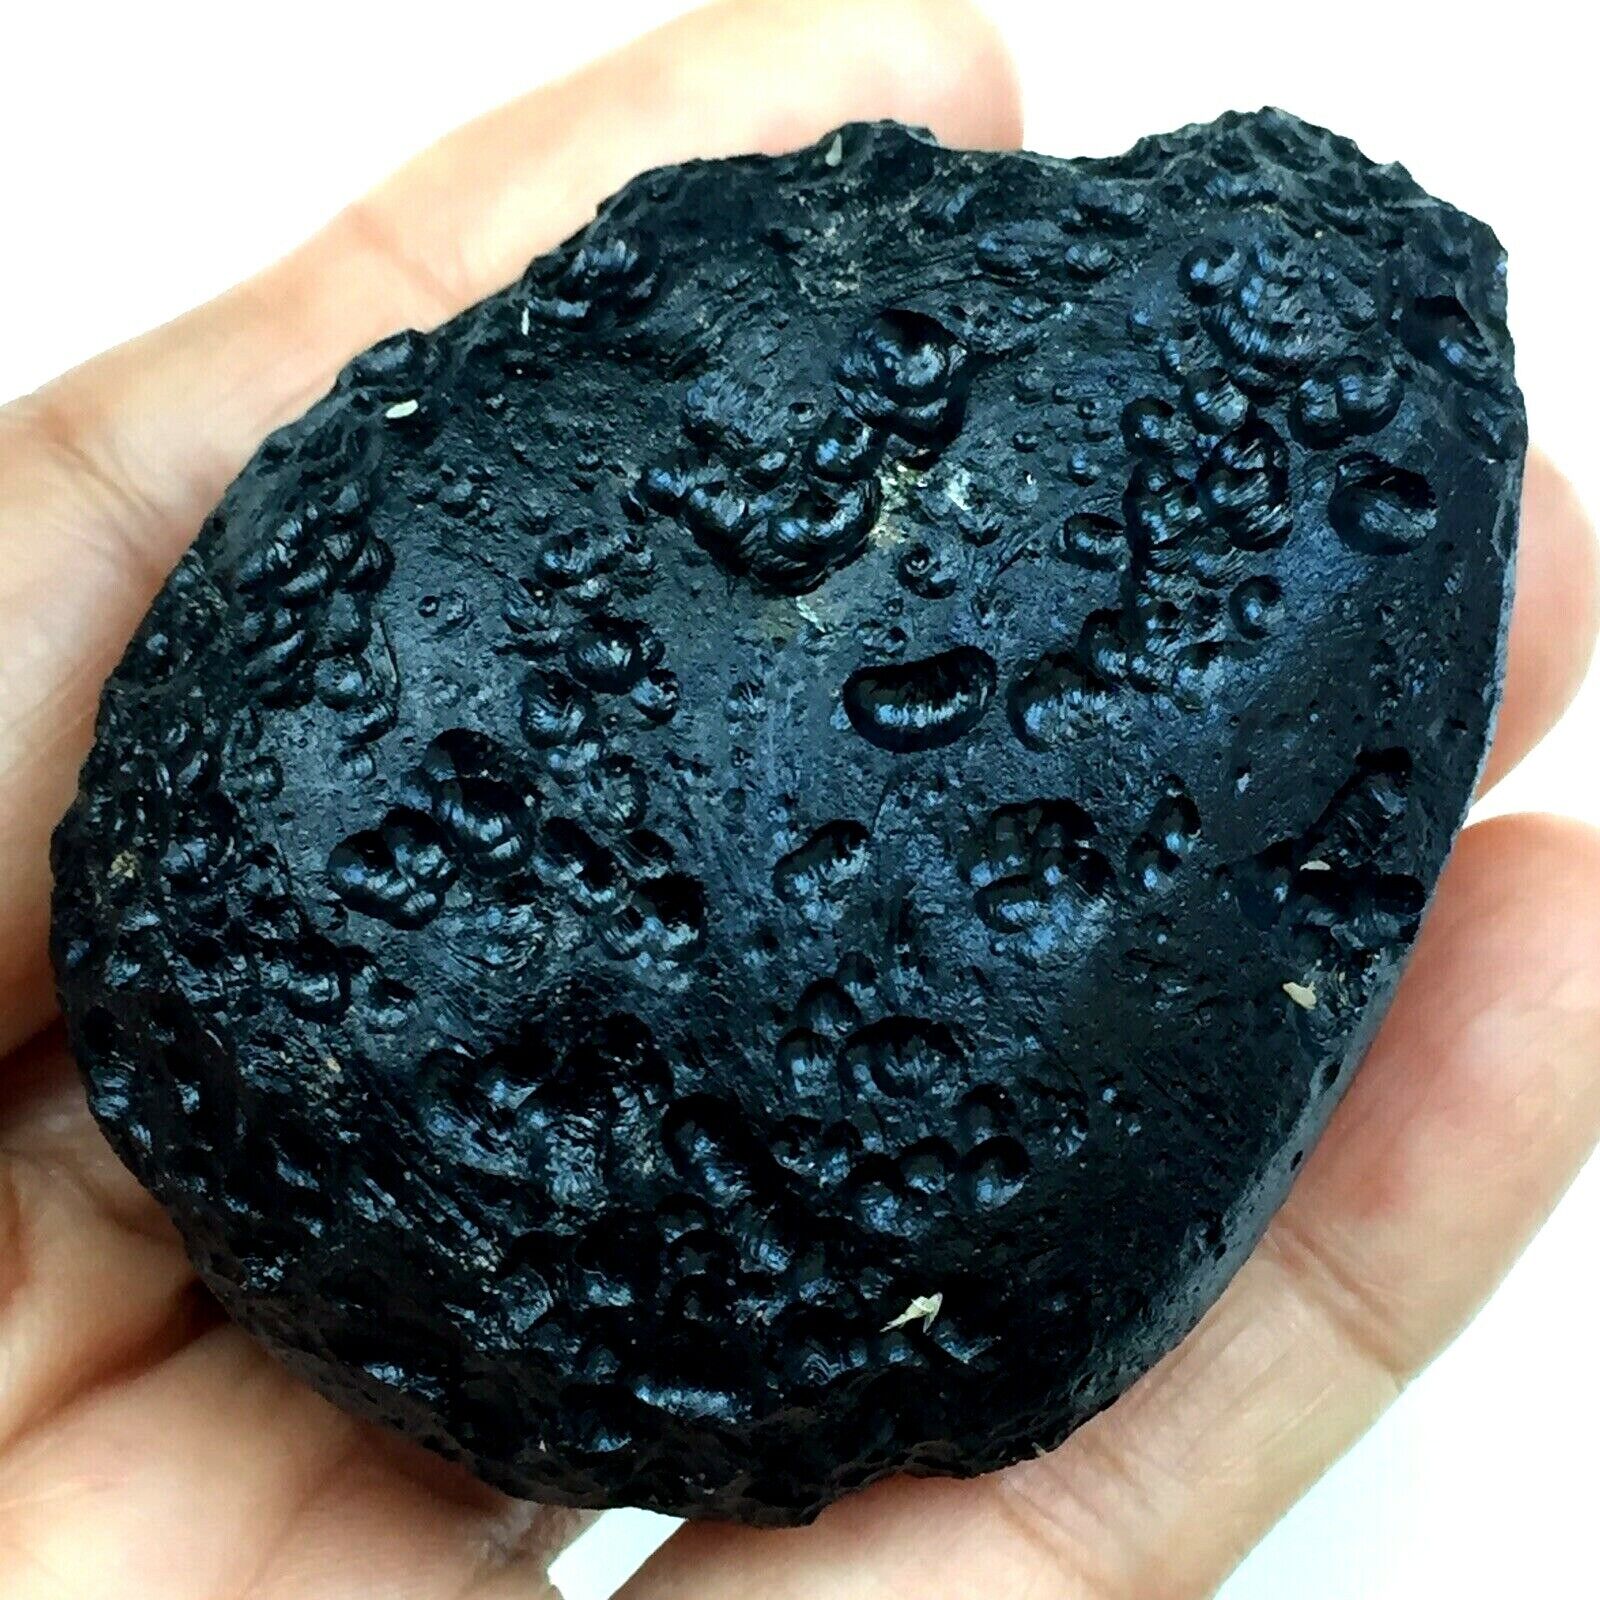 tektite indochinite space rock impactite meteorite impact stone gems 83 G rare